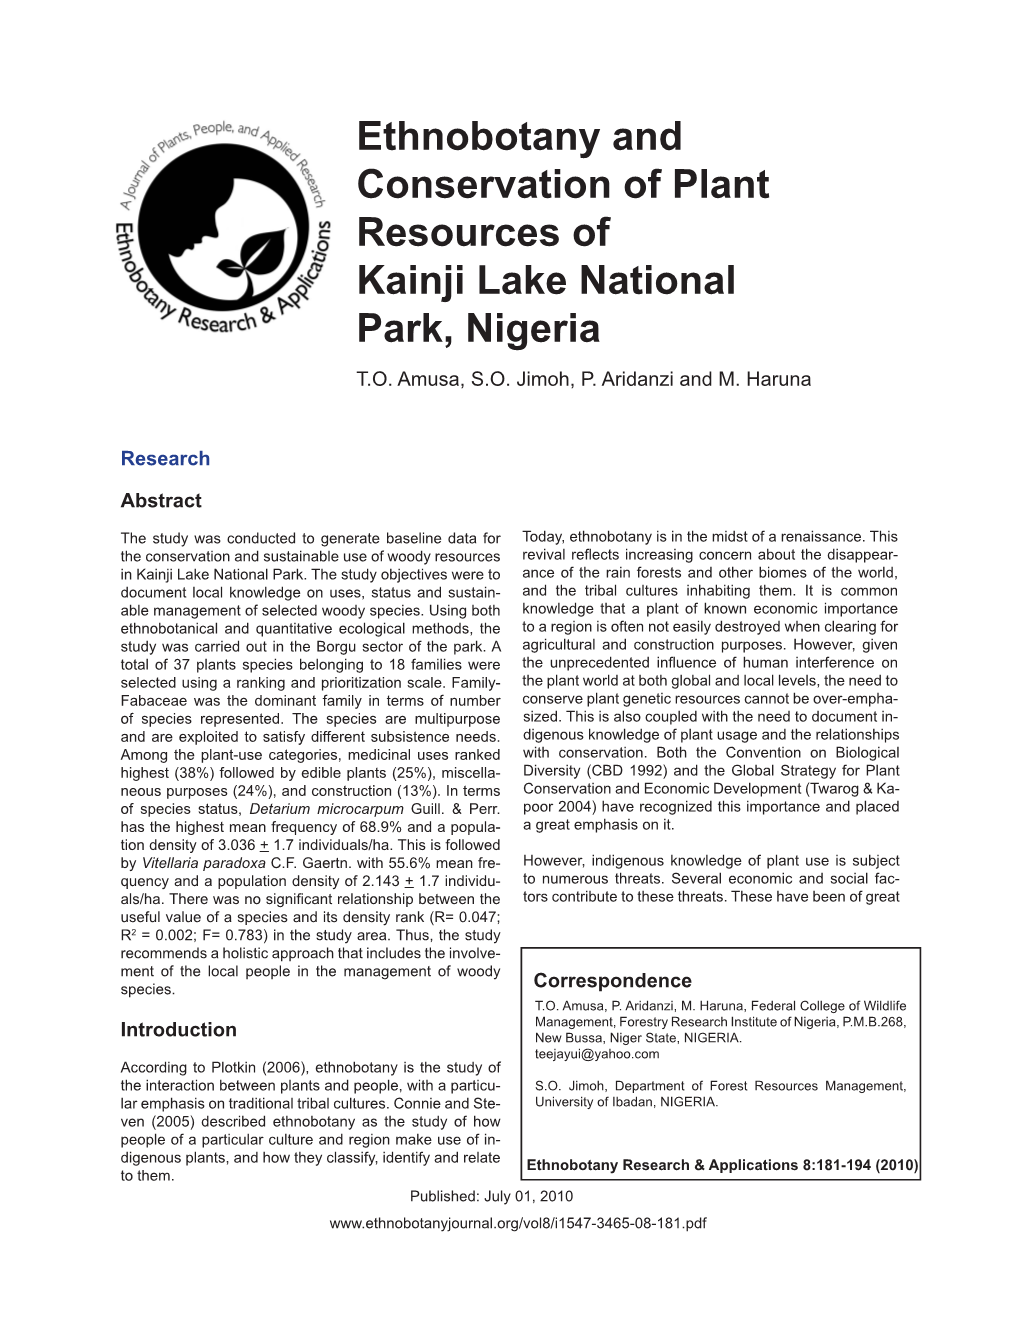 Ethnobotany and Conservation of Plant Resources of Kainji Lake National Park, Nigeria T.O